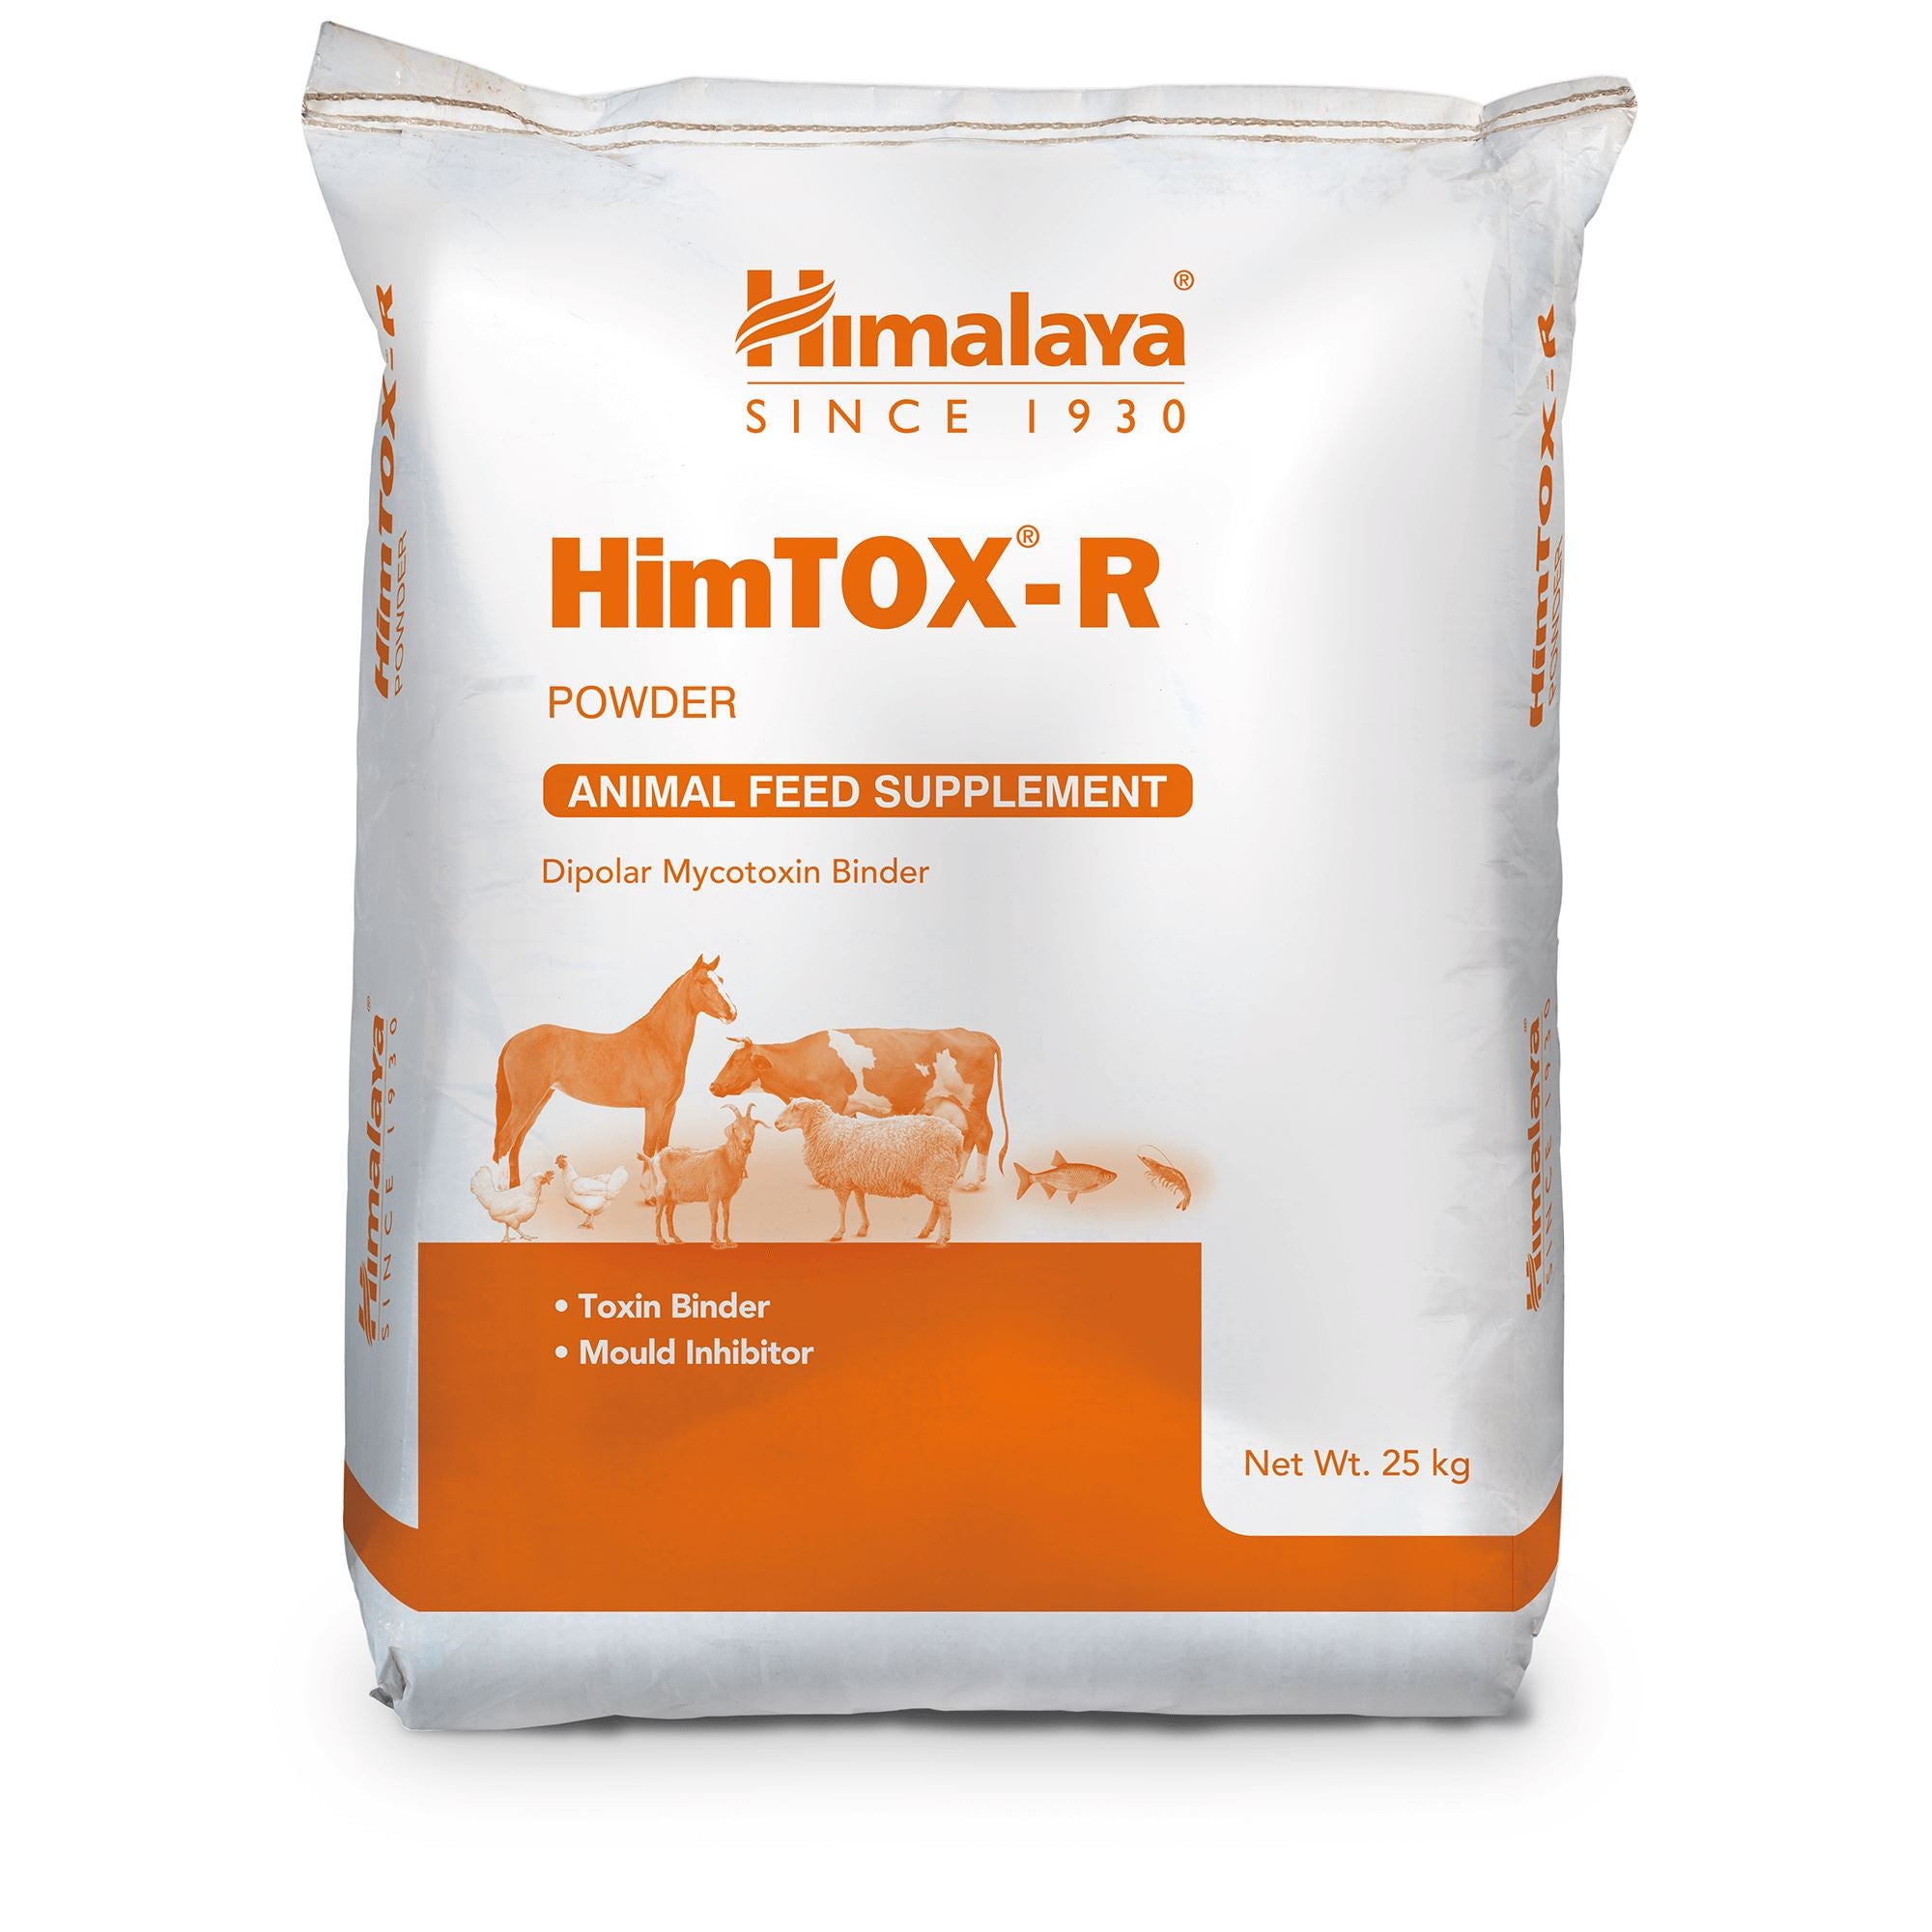 HimTOX-R Powder